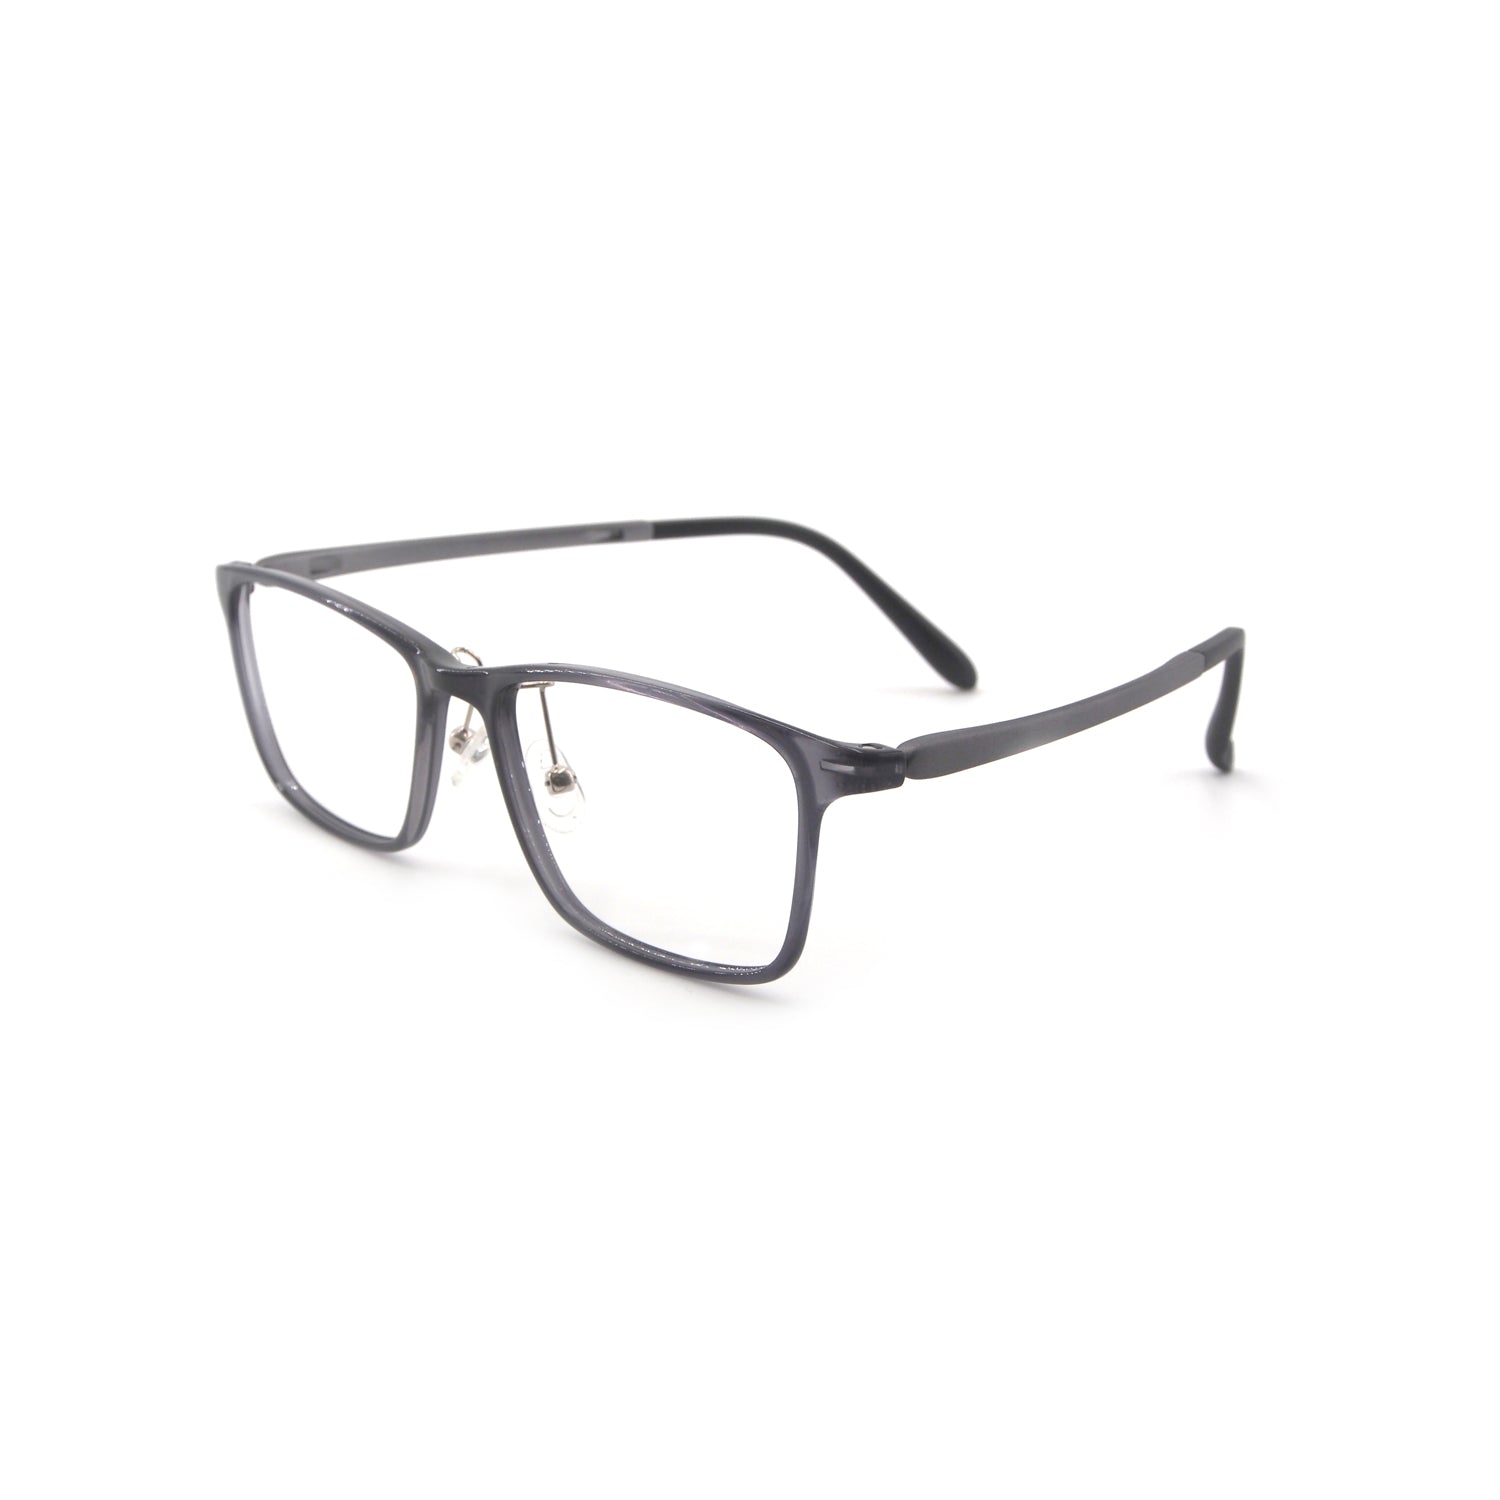 Sirocco in Spectre Grey Eyeglasses - sightonomy